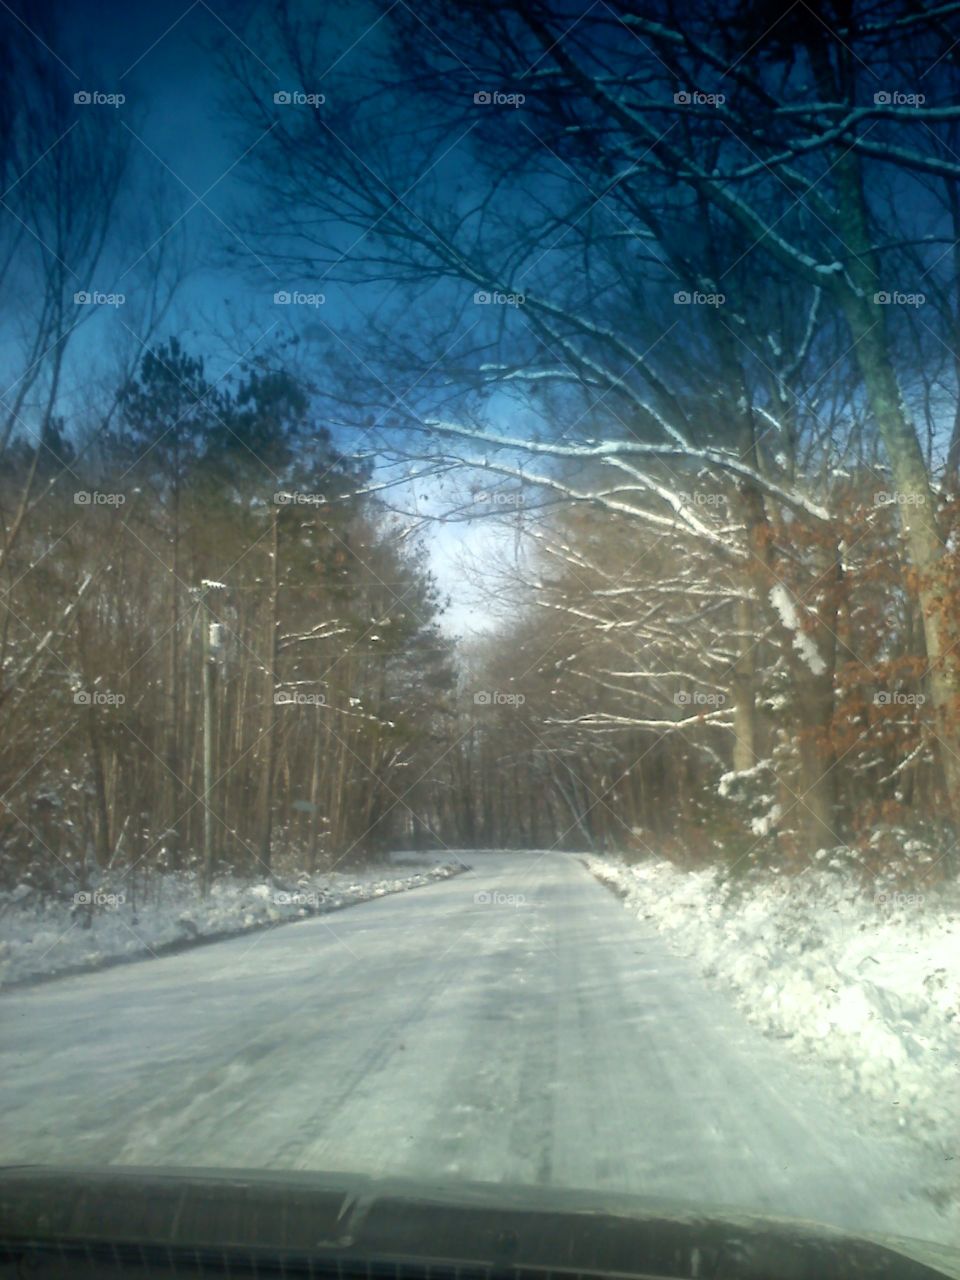 icy roads in Virginia